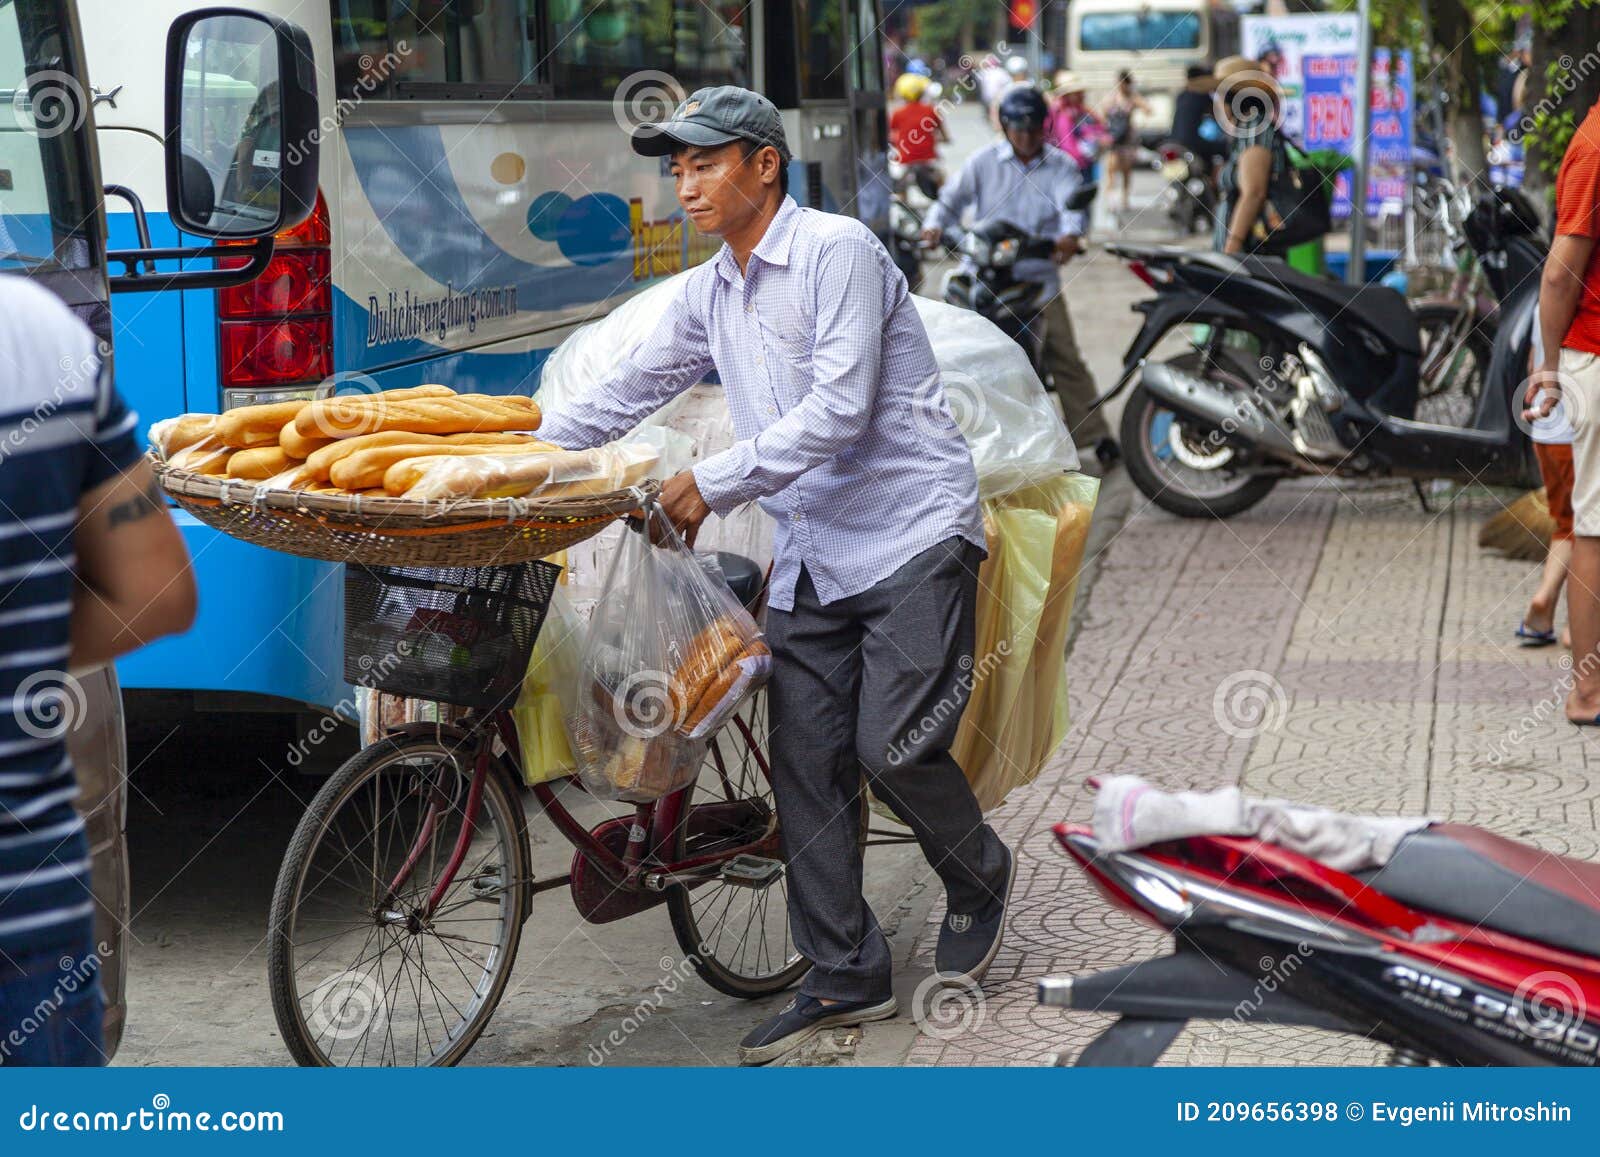 https://thumbs.dreamstime.com/z/vendedora-de-p%C3%A3o-vietnamita-vendendo-comida-bicicleta-na-rua-alimentos-ba-ilha-vietnam-june-junho-209656398.jpg